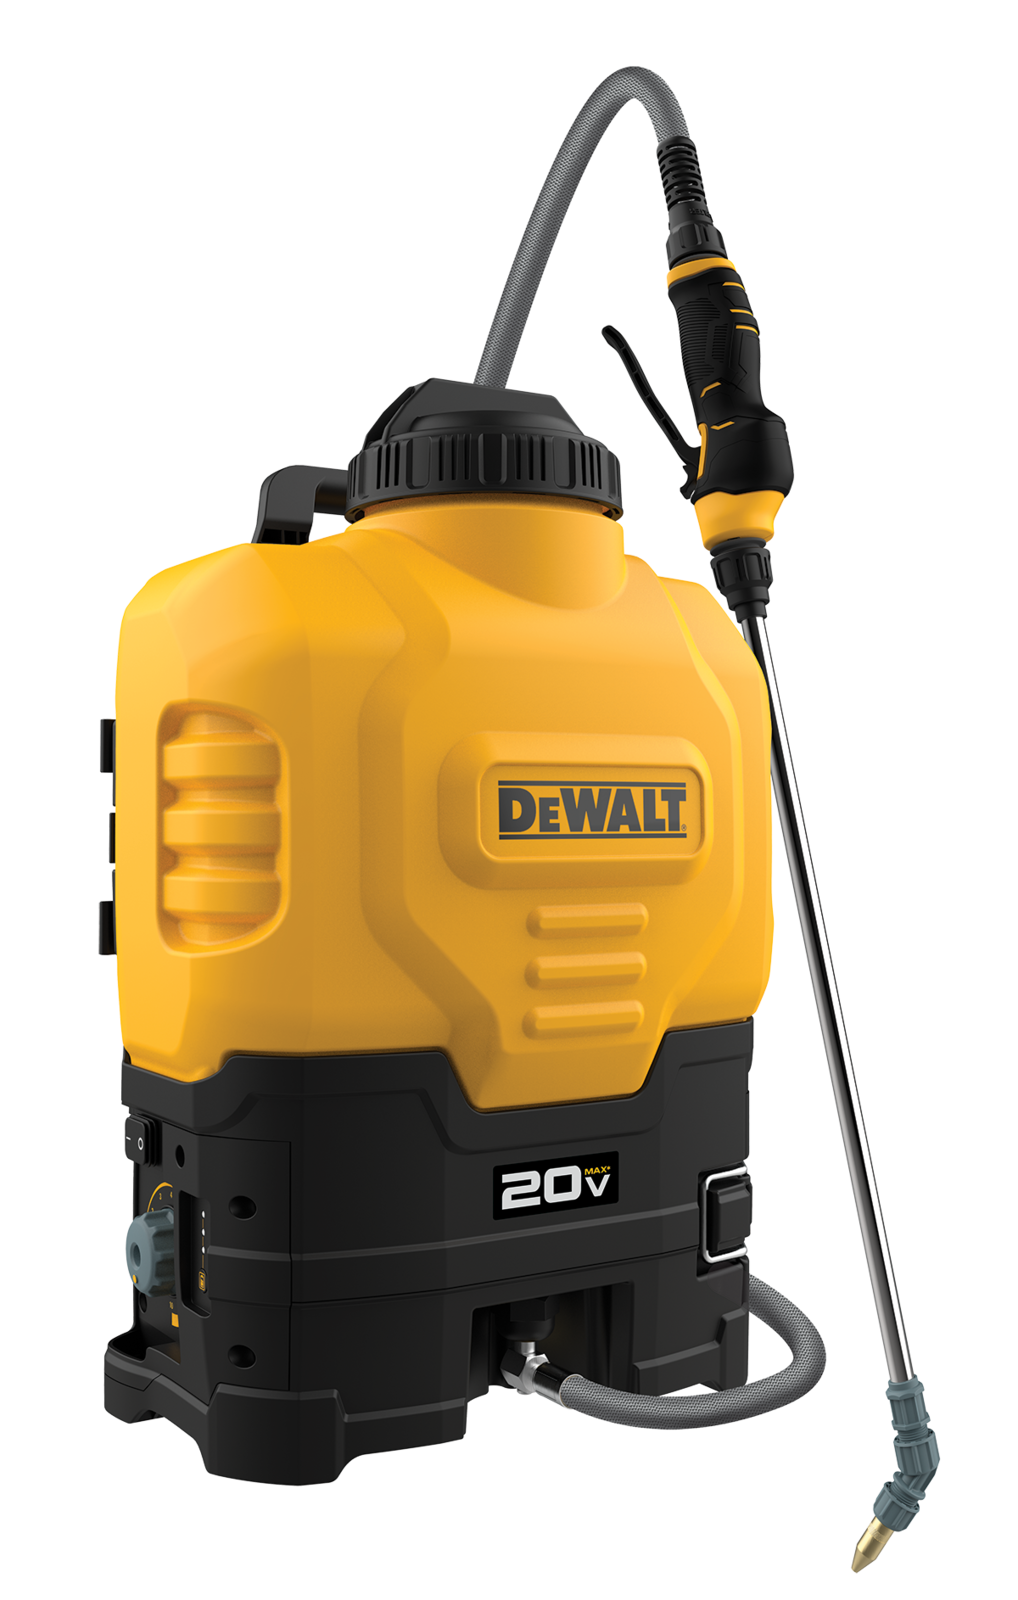 DEWALT®  20V* Lithium-ion Battery Powered Backpack Sprayer, Model DXSP190681